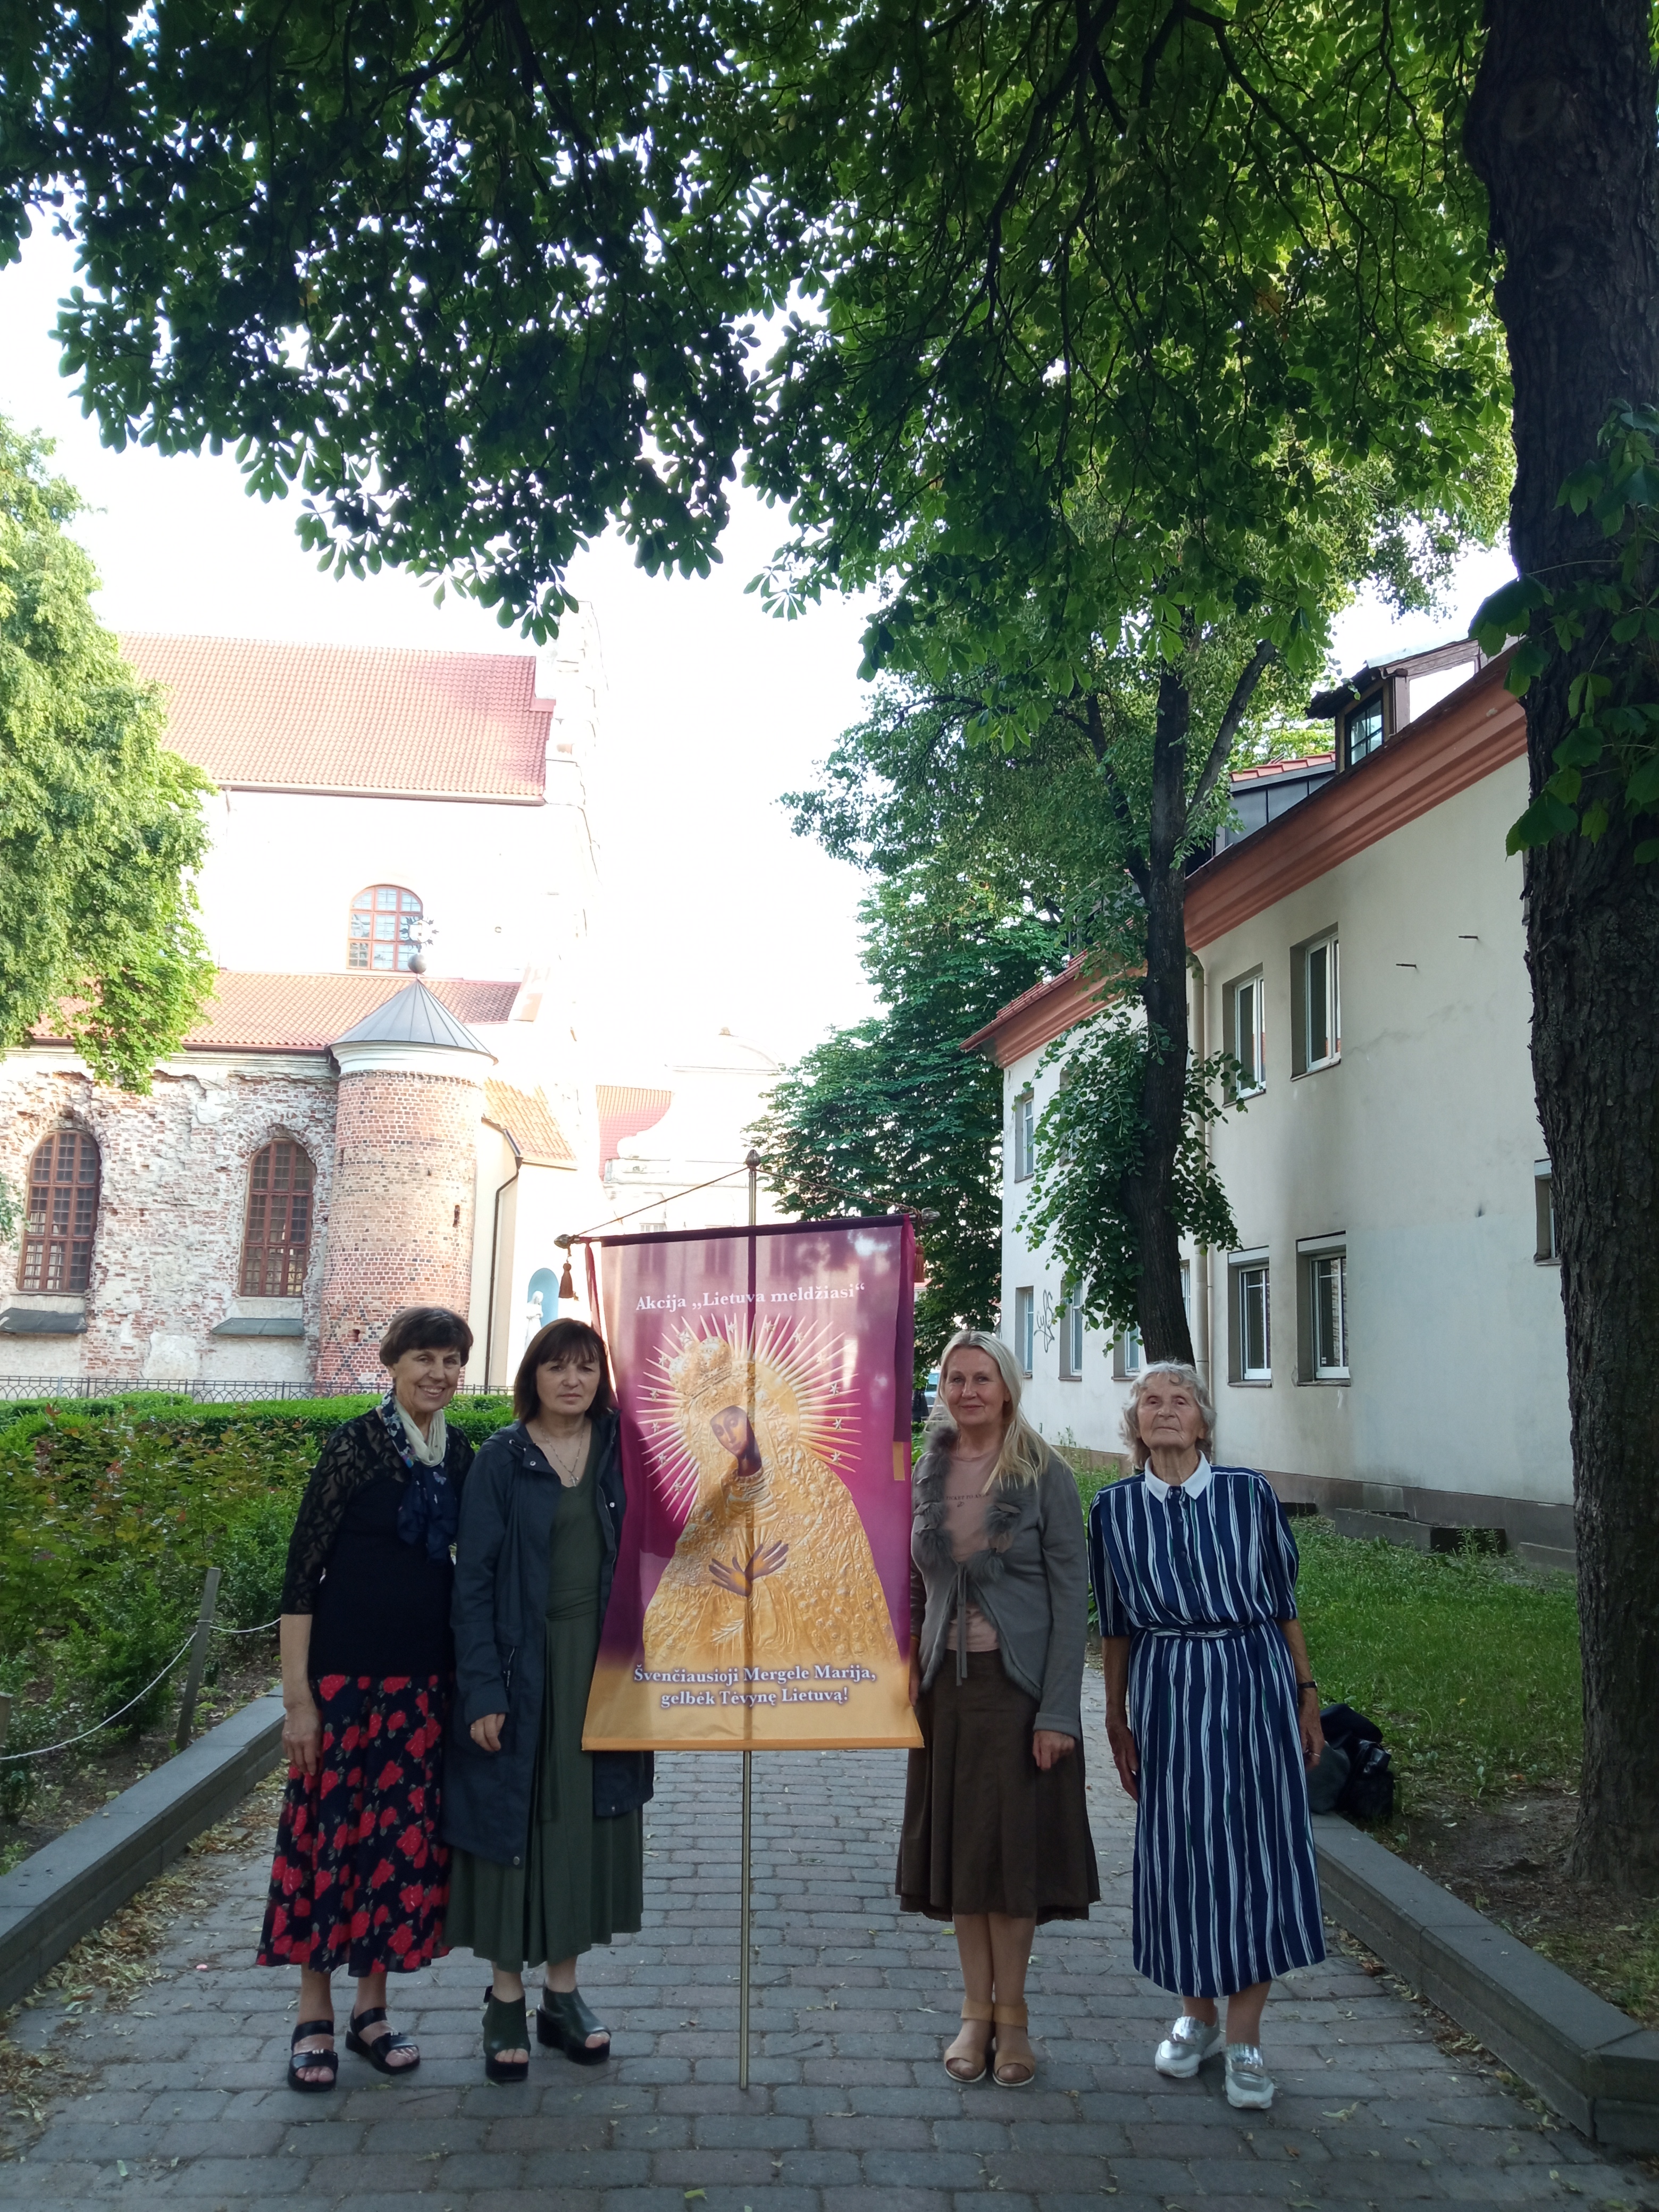 Vilniuje gegužės 29d. meldėsi 4 maldininkės.
